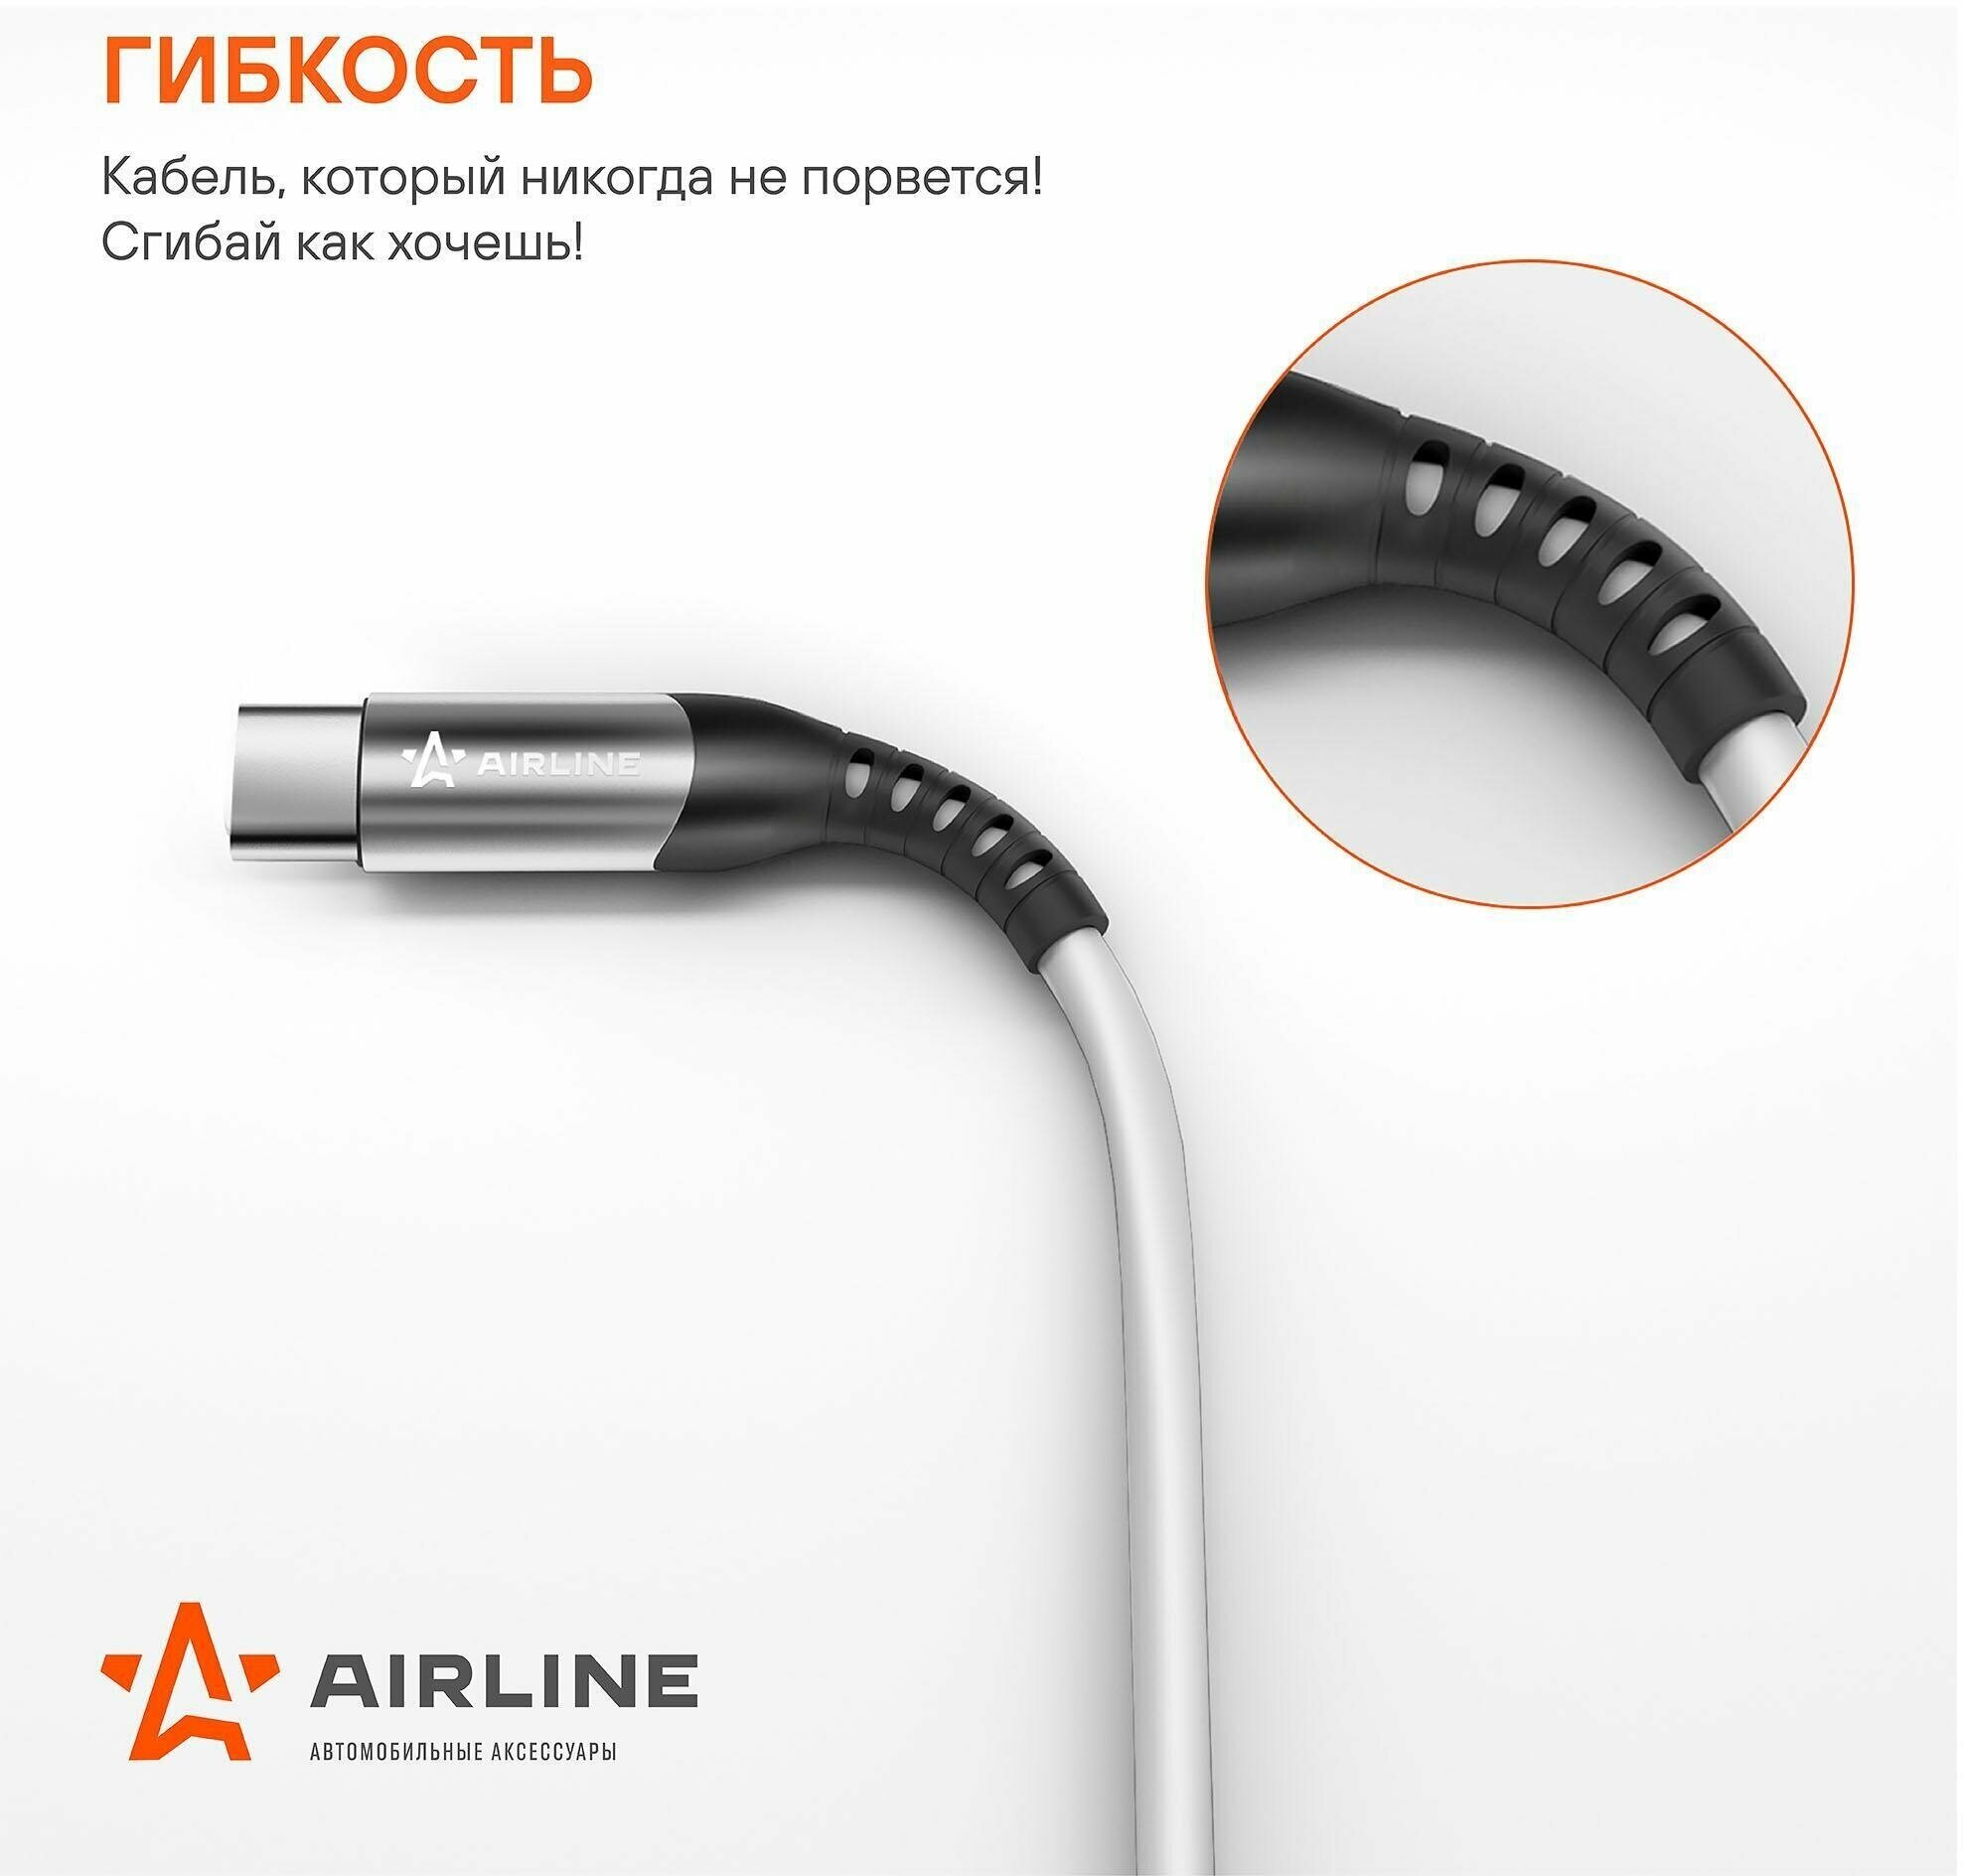 Airline кабель usb - type-c 1м, белый soft-touch (ach-c-47) achc47